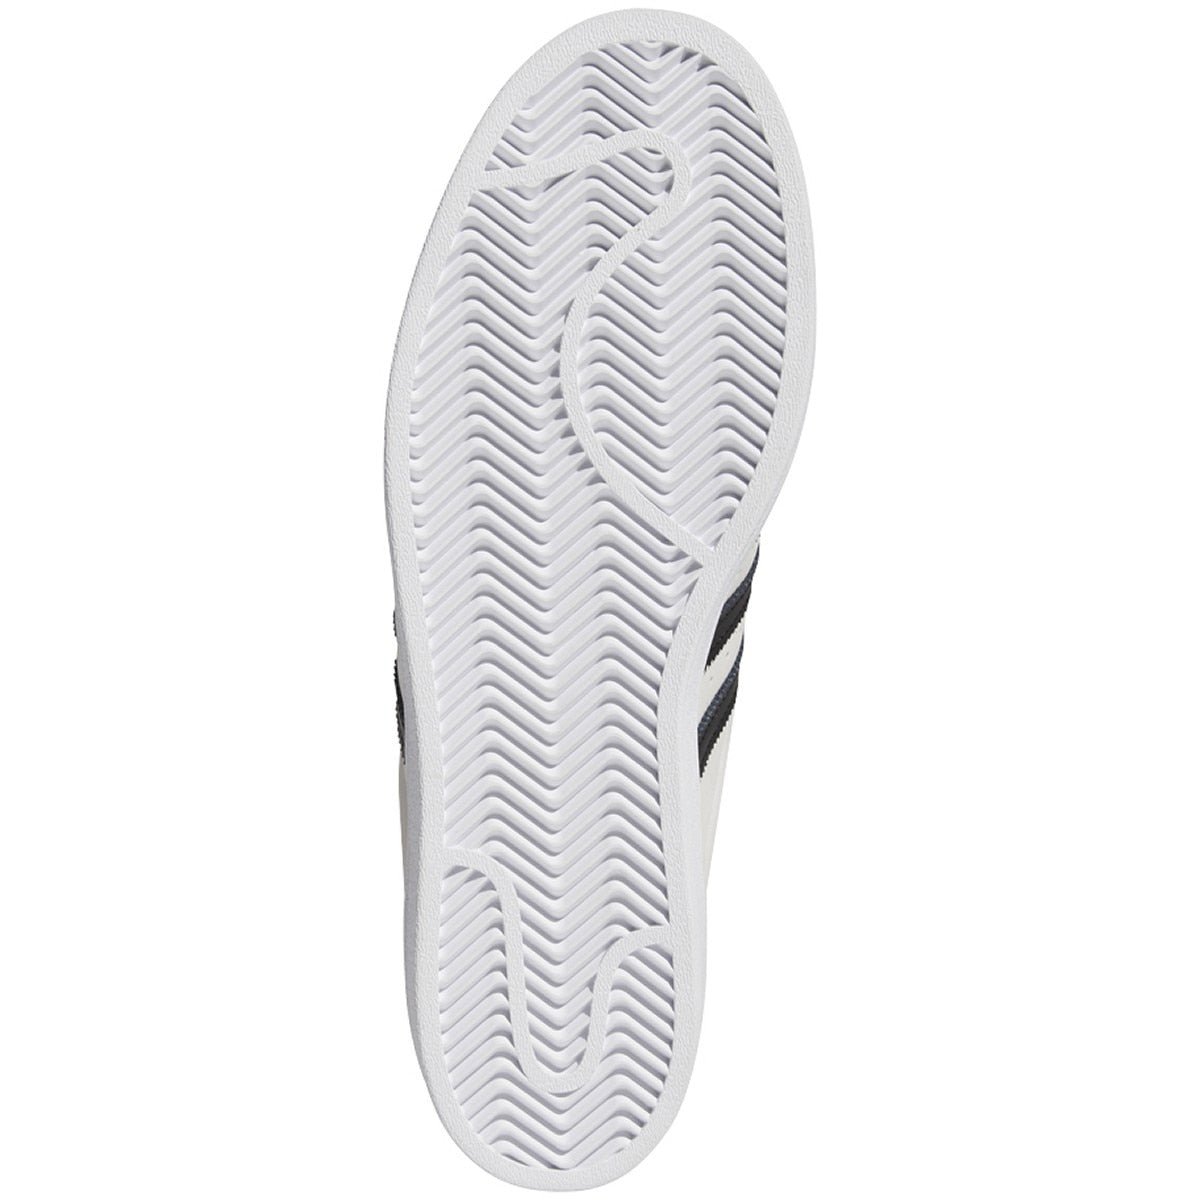 Adidas Superstar ADV Skate Shoe - White/Black/Gold